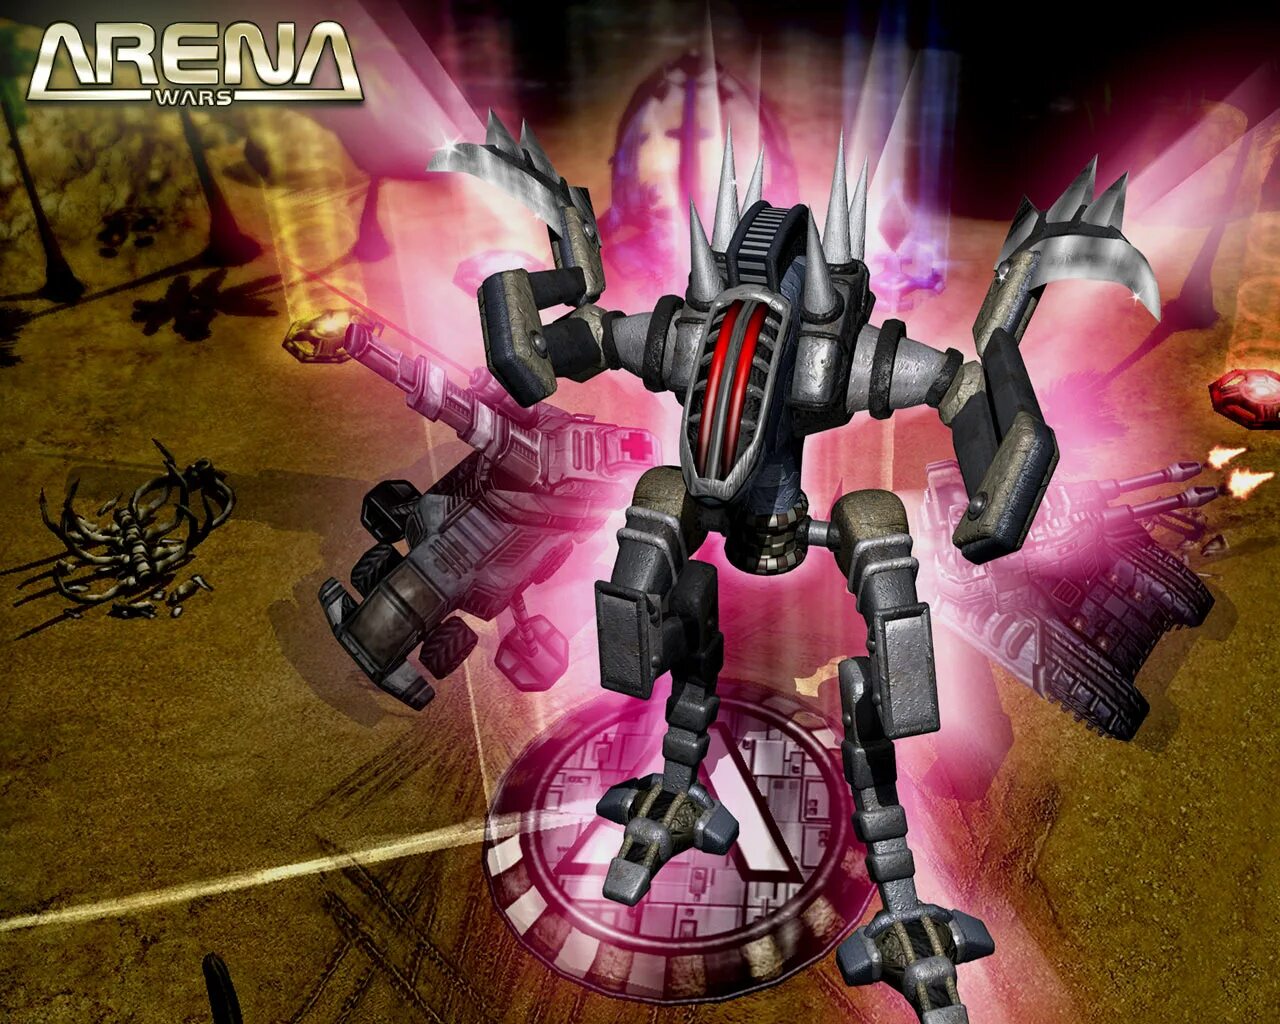 Arena wars 2. Arena Wars Reloaded. Arena Wars Flash game.